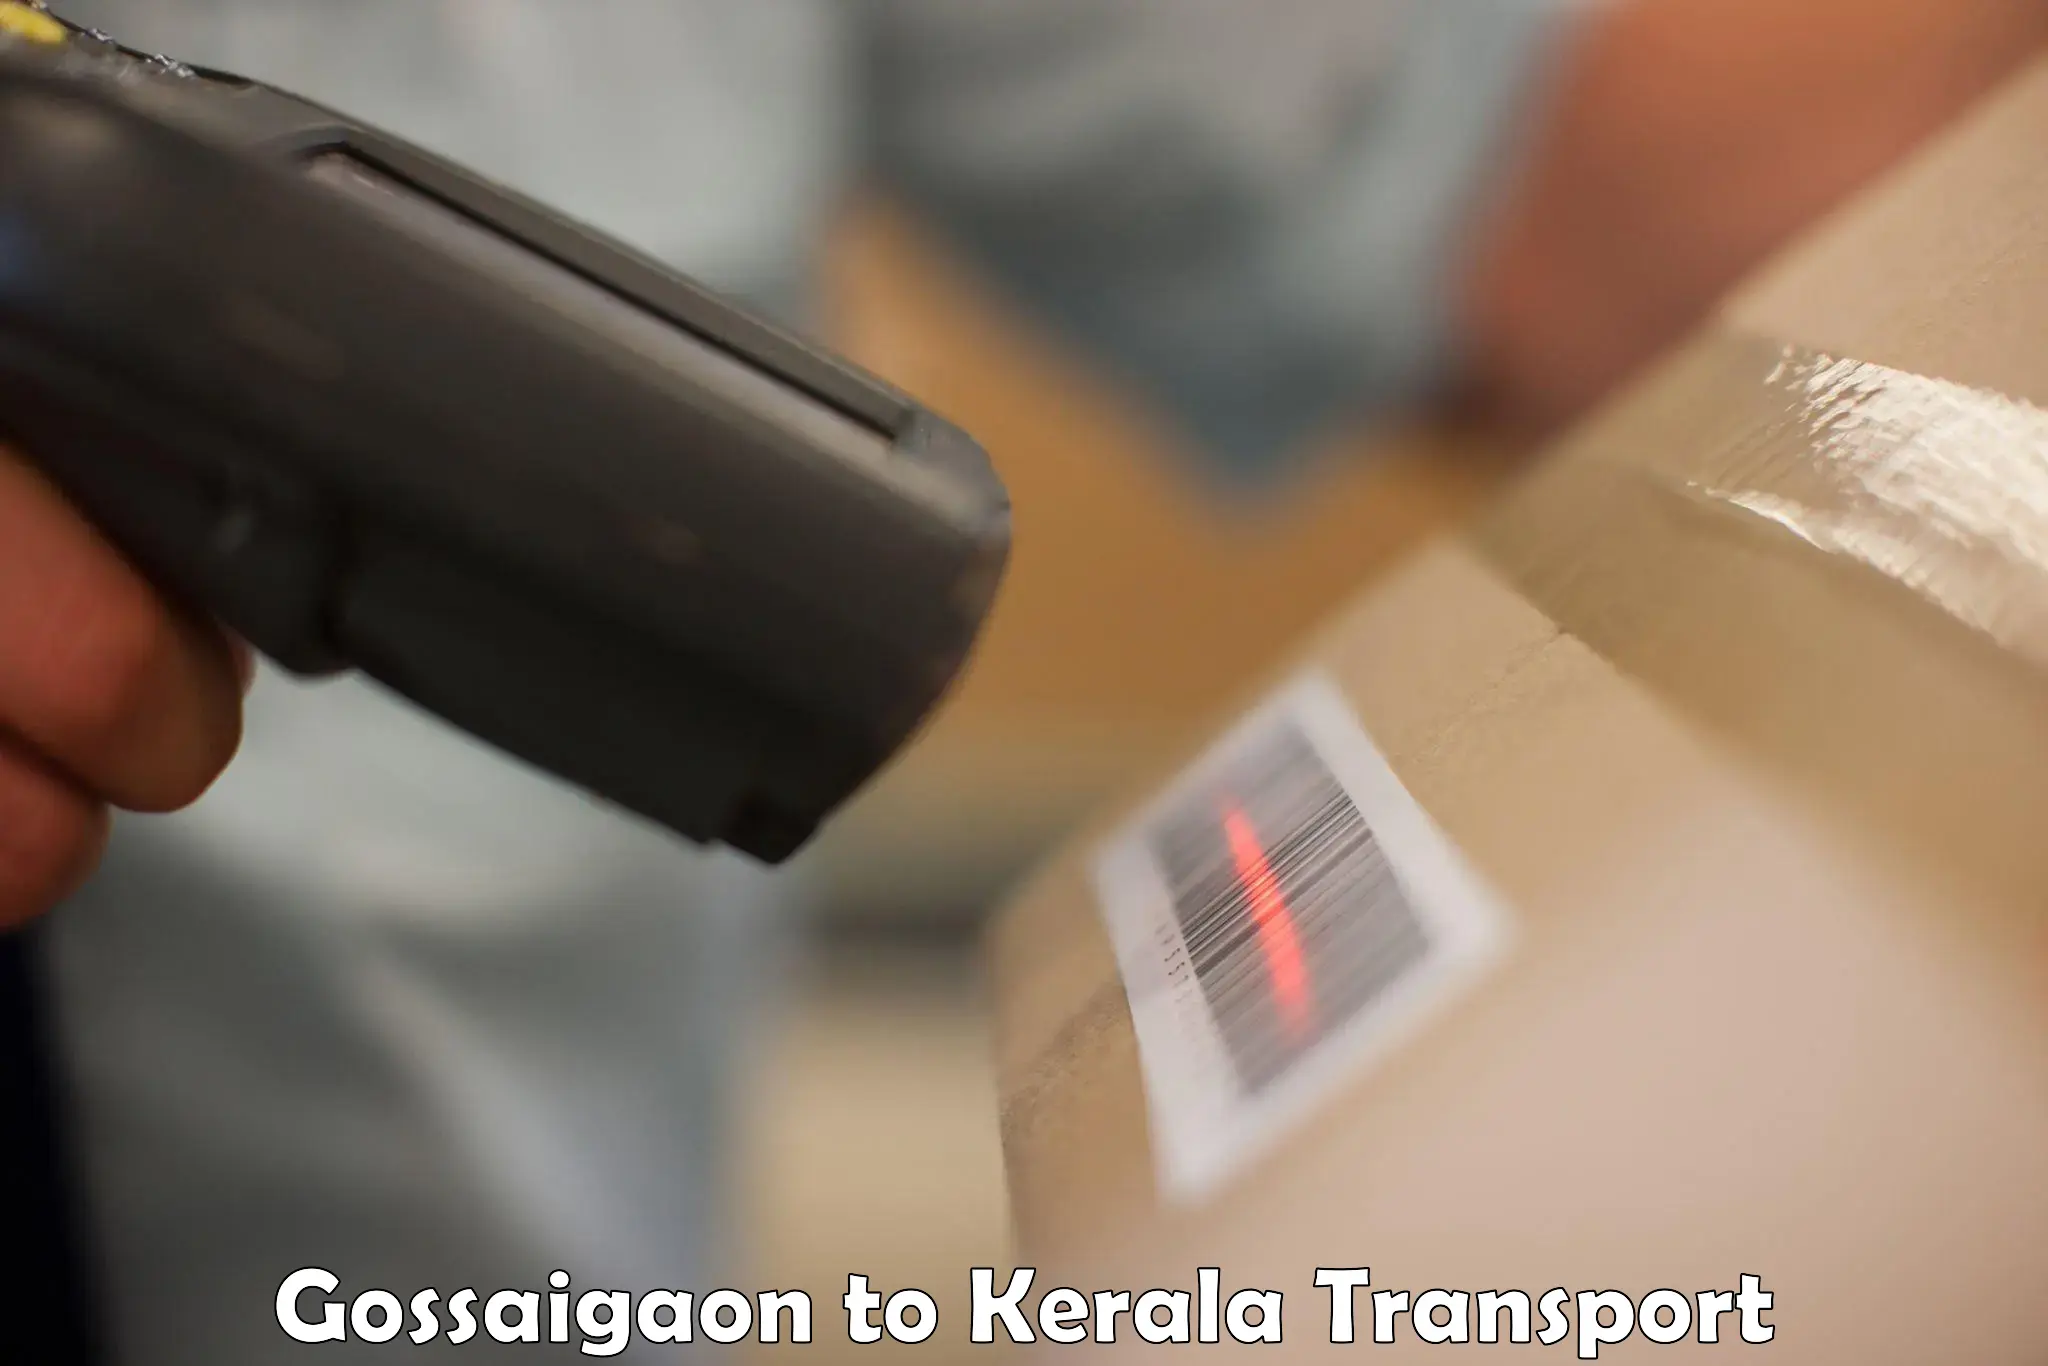 Truck transport companies in India Gossaigaon to Kochi